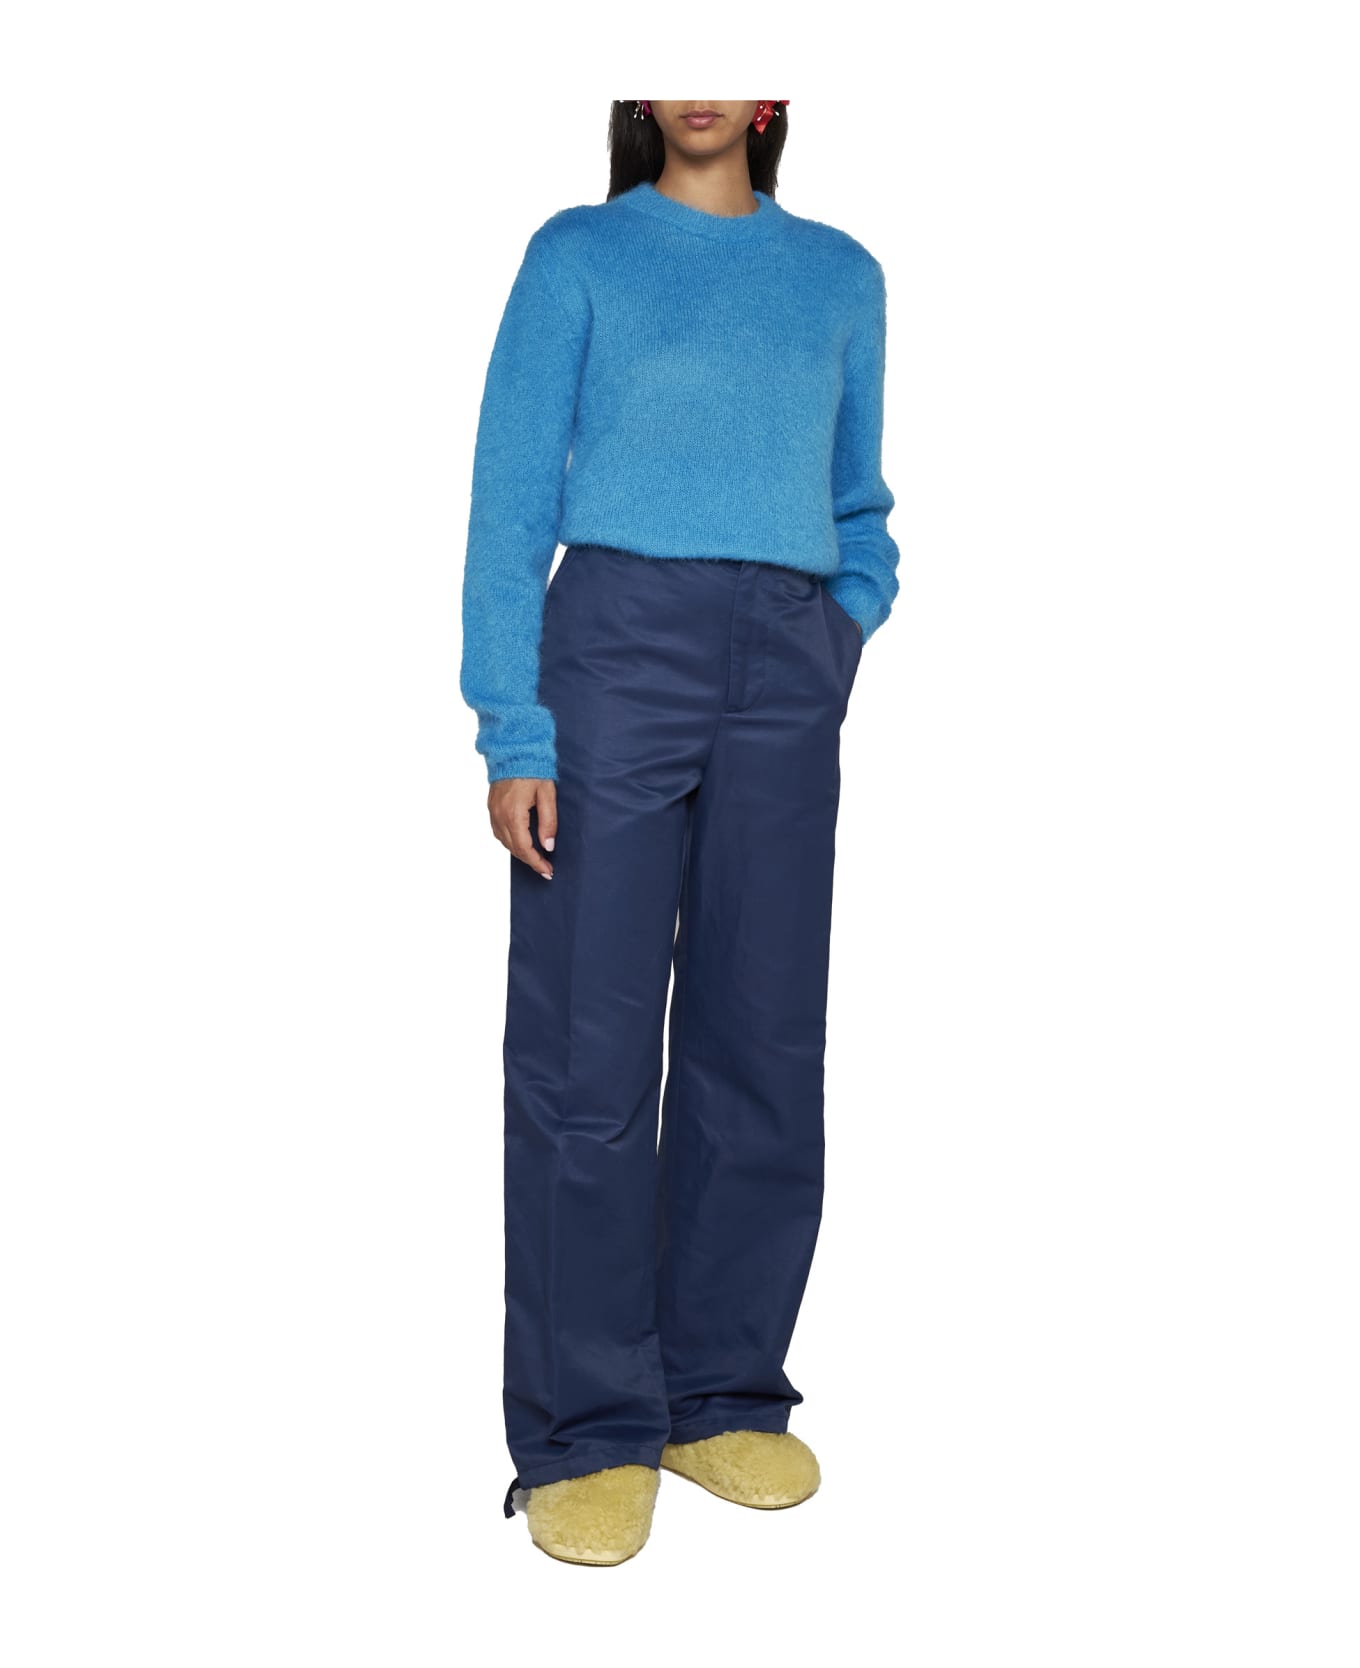 Marni Sweater - Cobalt